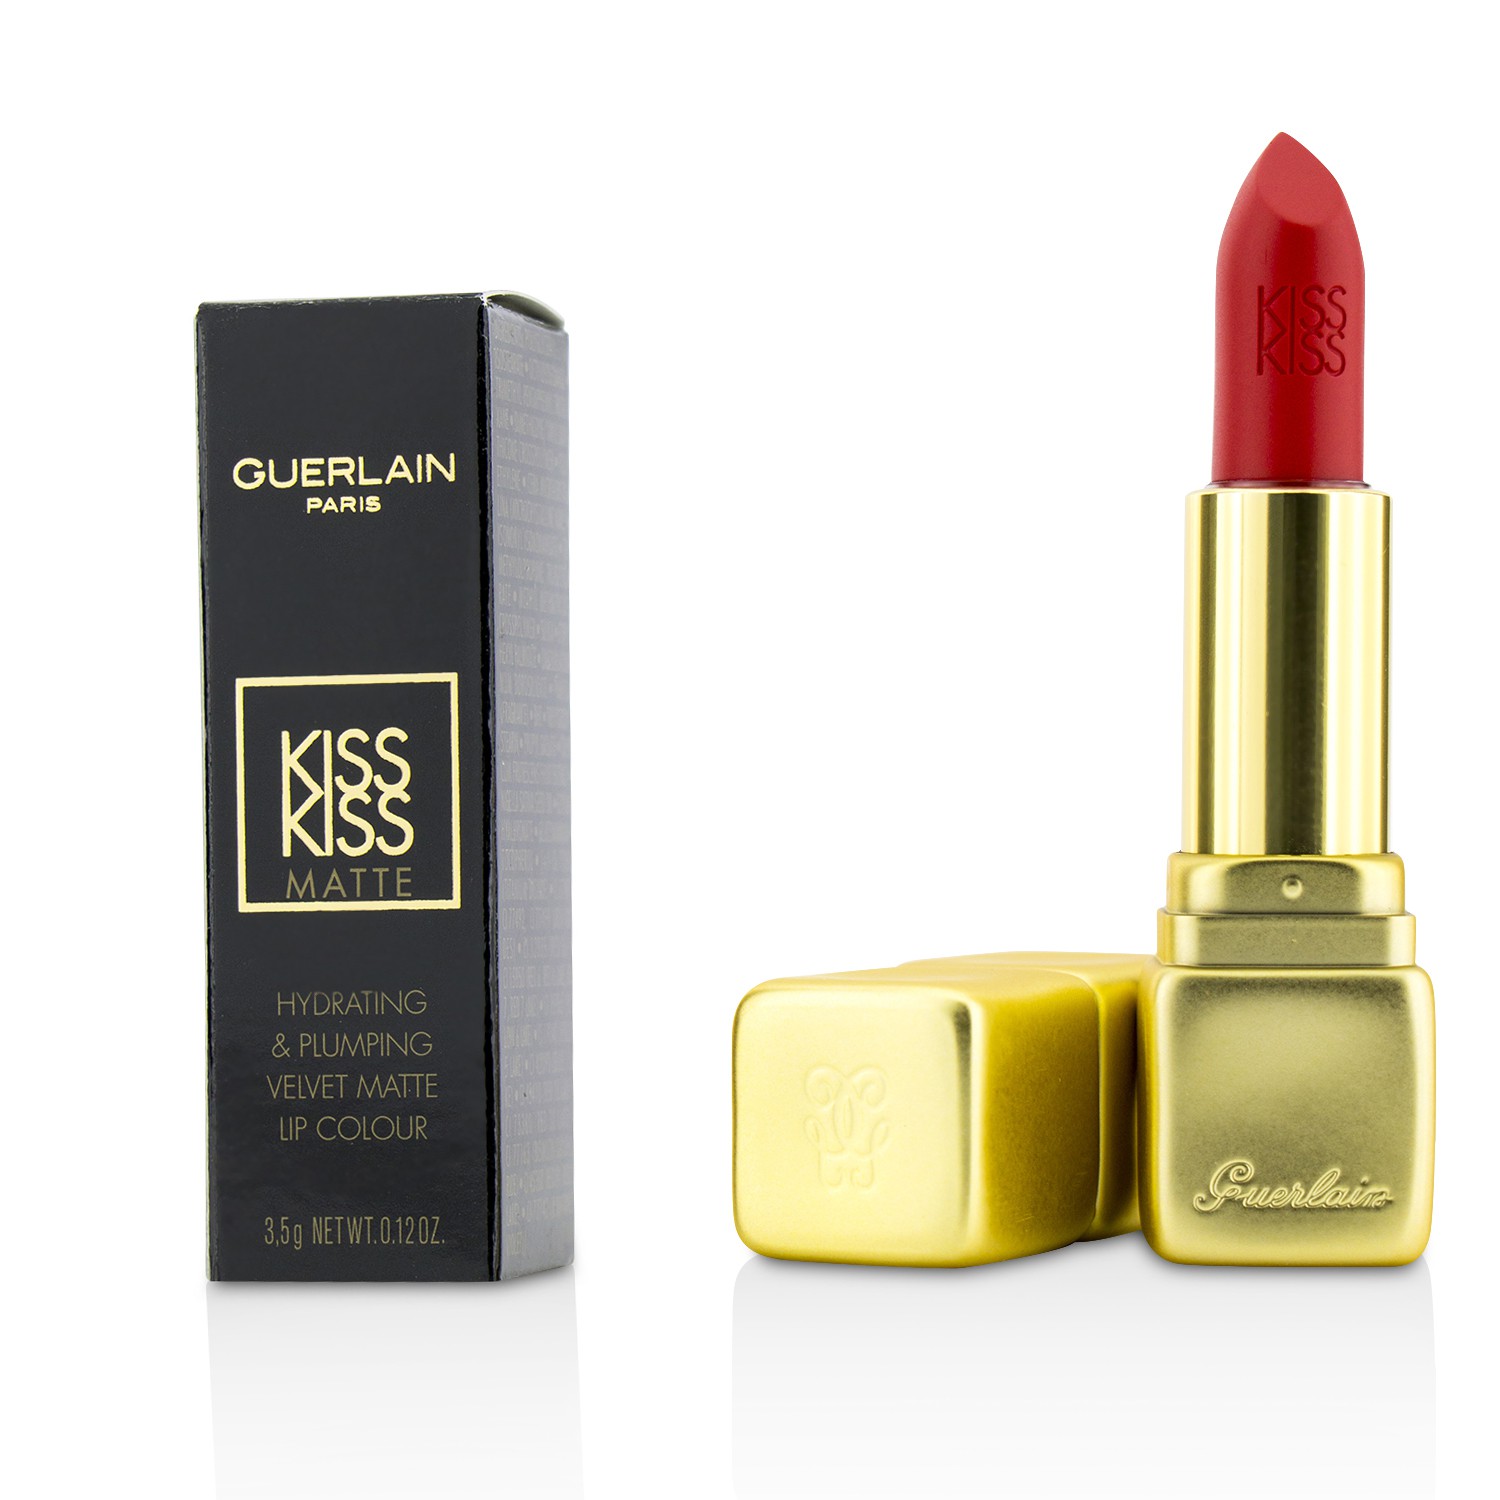 KissKiss Matte Hydrating Matte Lip Colour - # M331 Chilli Red Guerlain Image